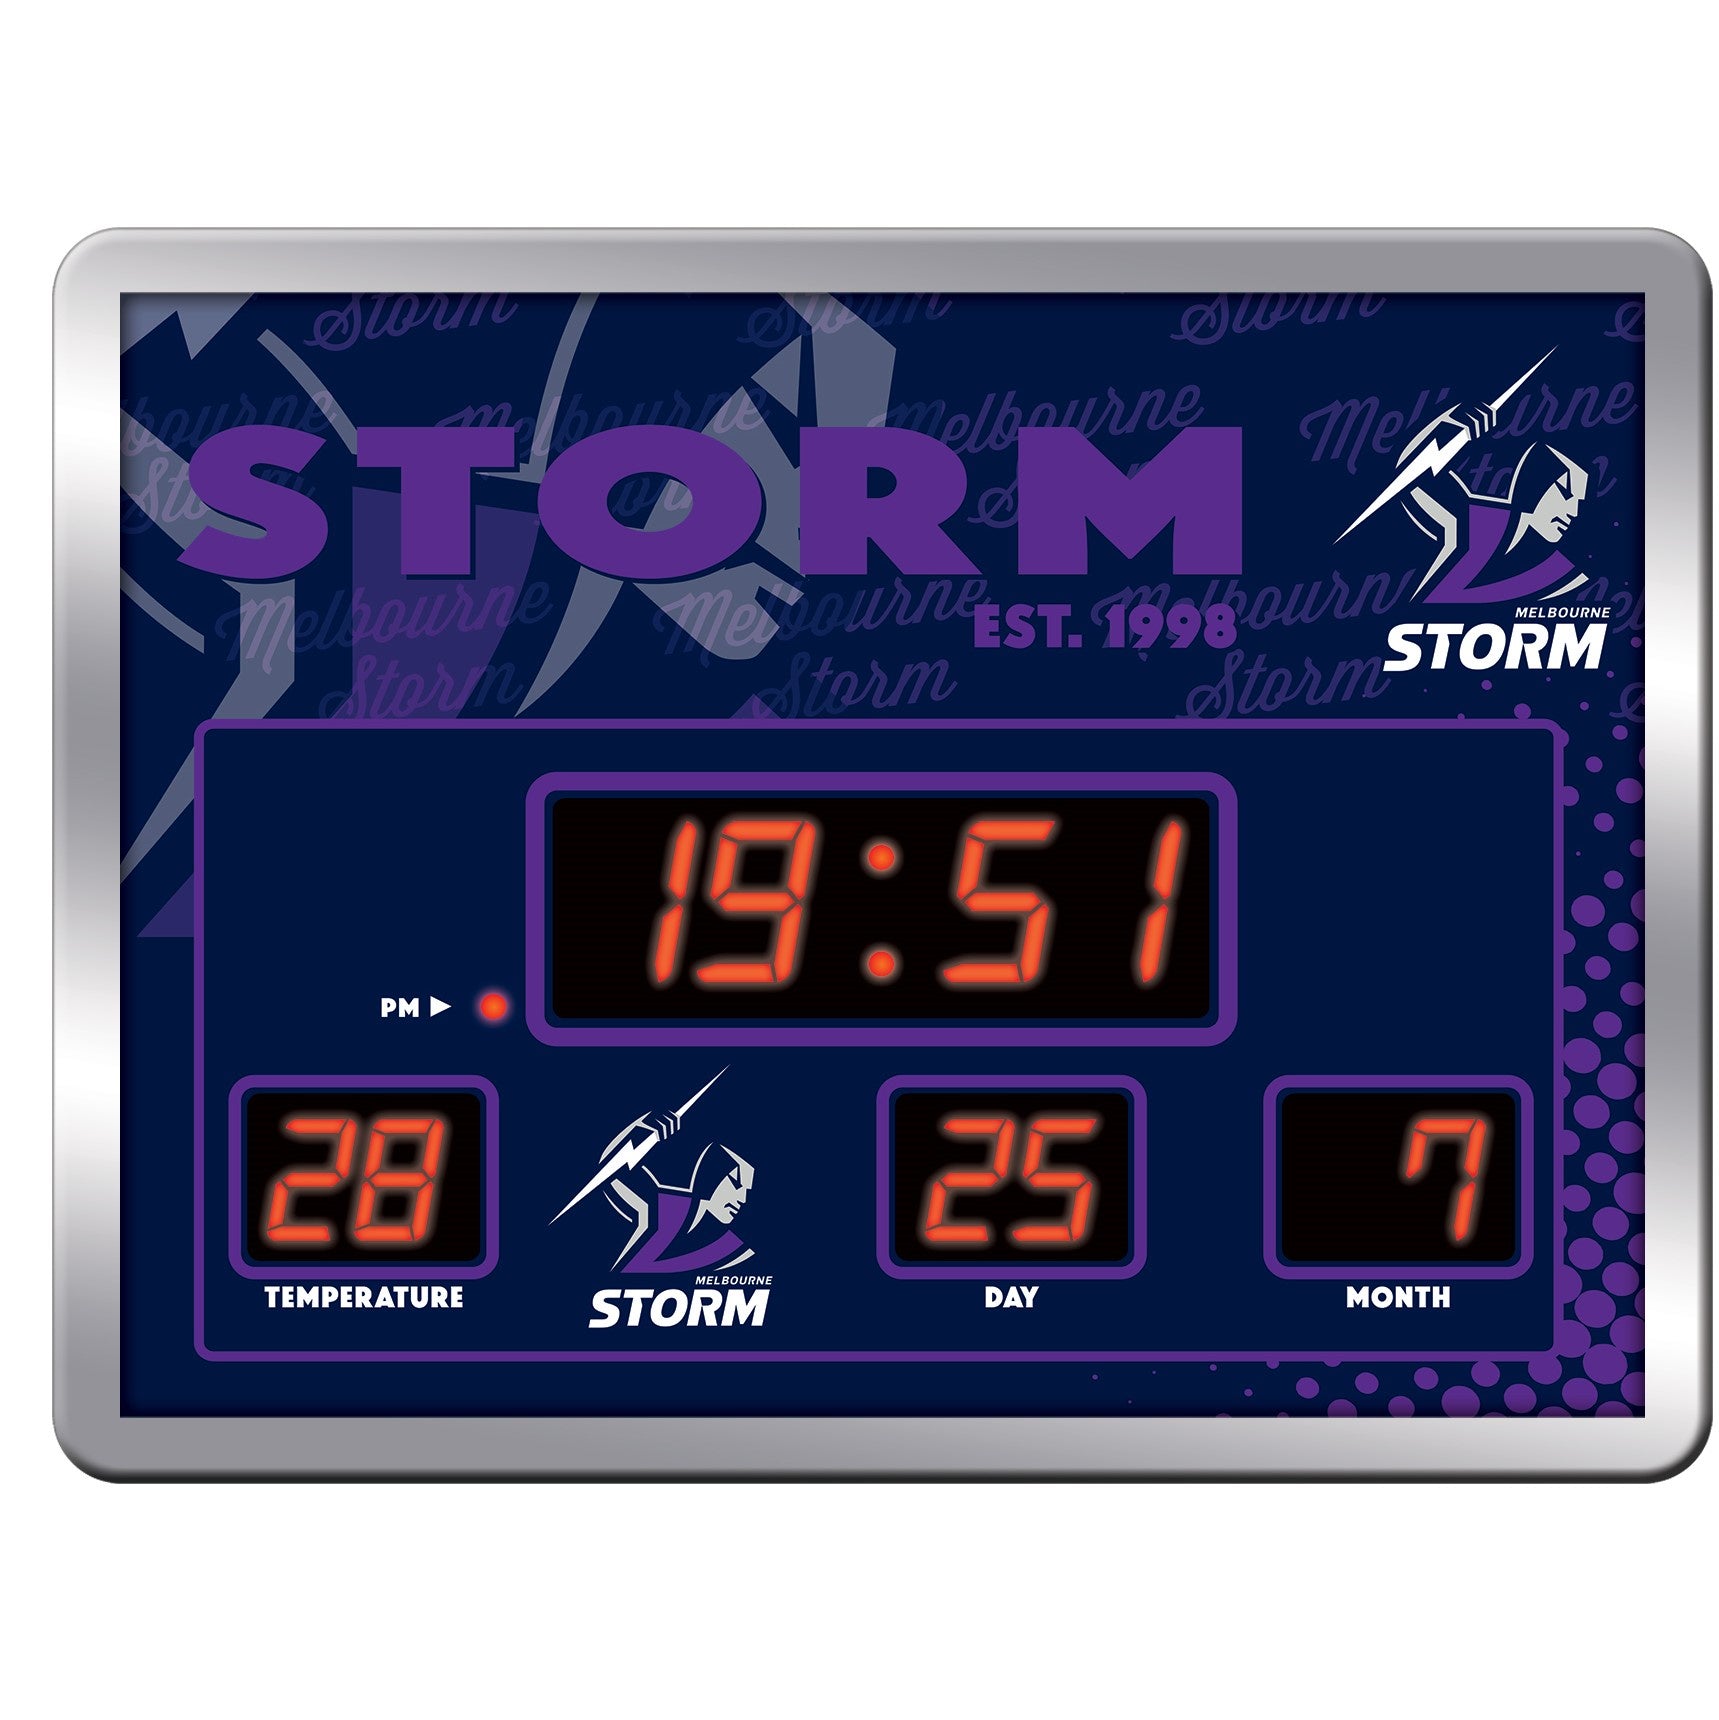 Melbourne Storm Scoreboard Clock